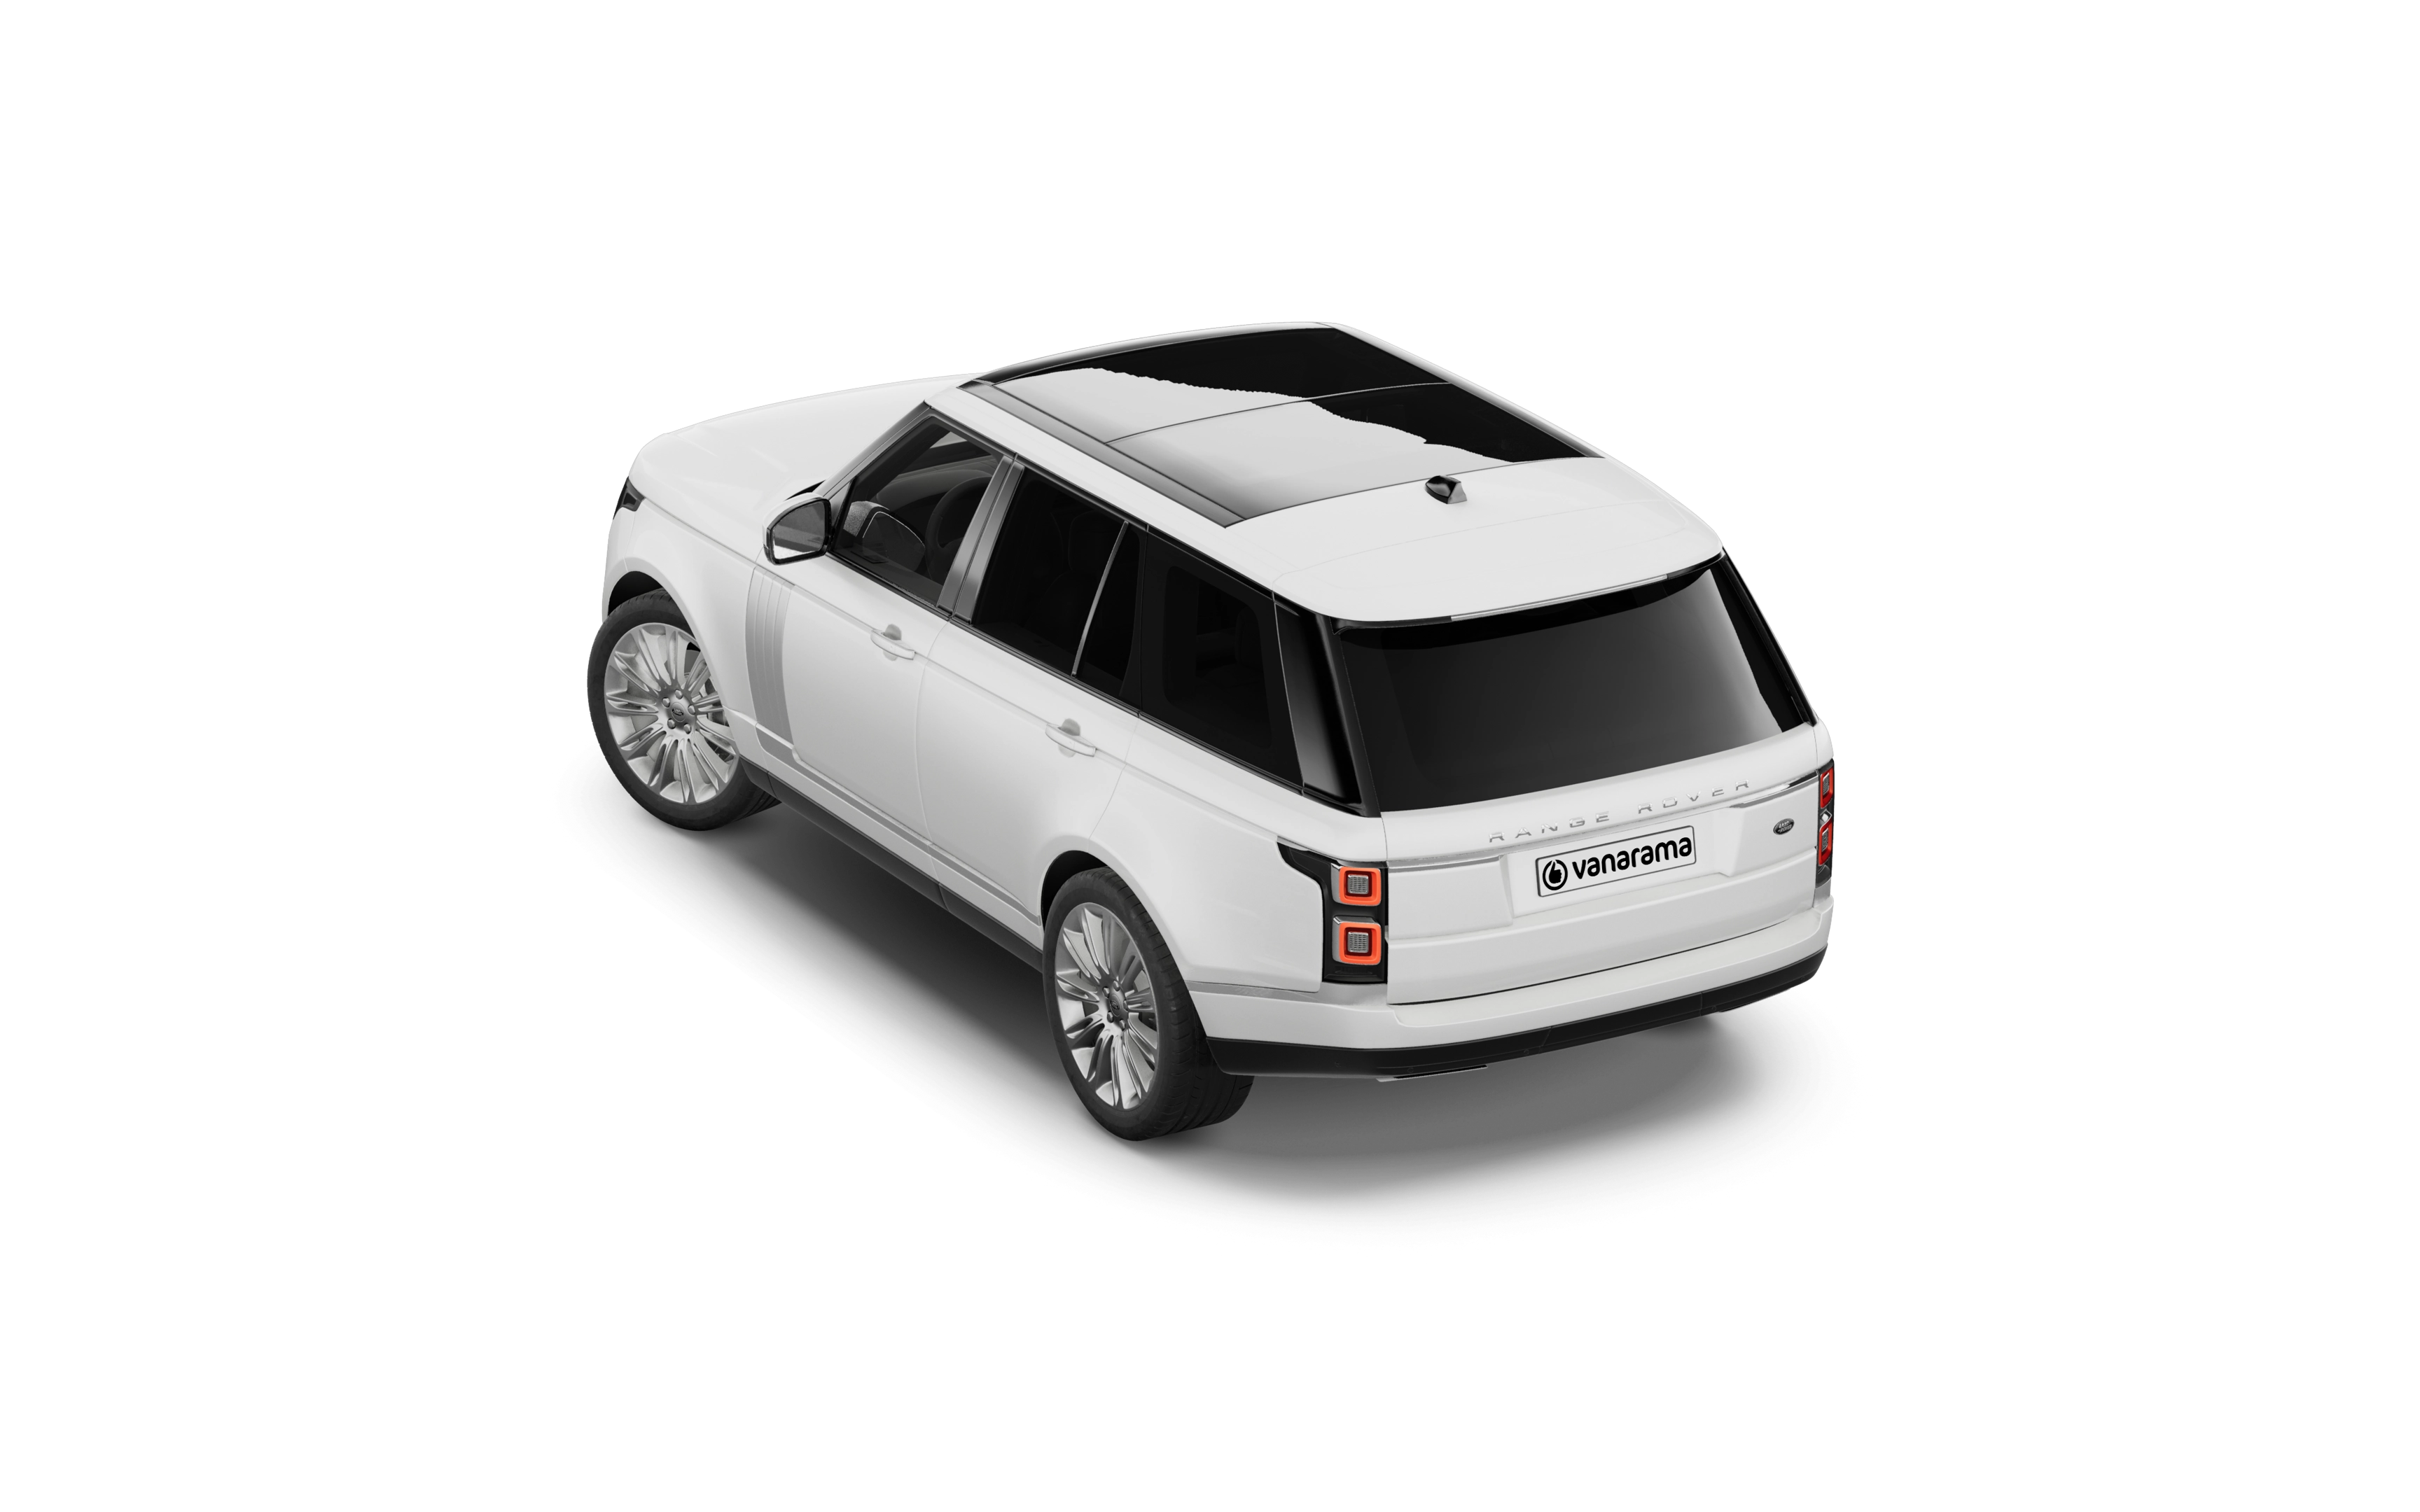 Land rover range rover estate 3.0 d350 autobiography lwb 4 doors auto [7 seat]